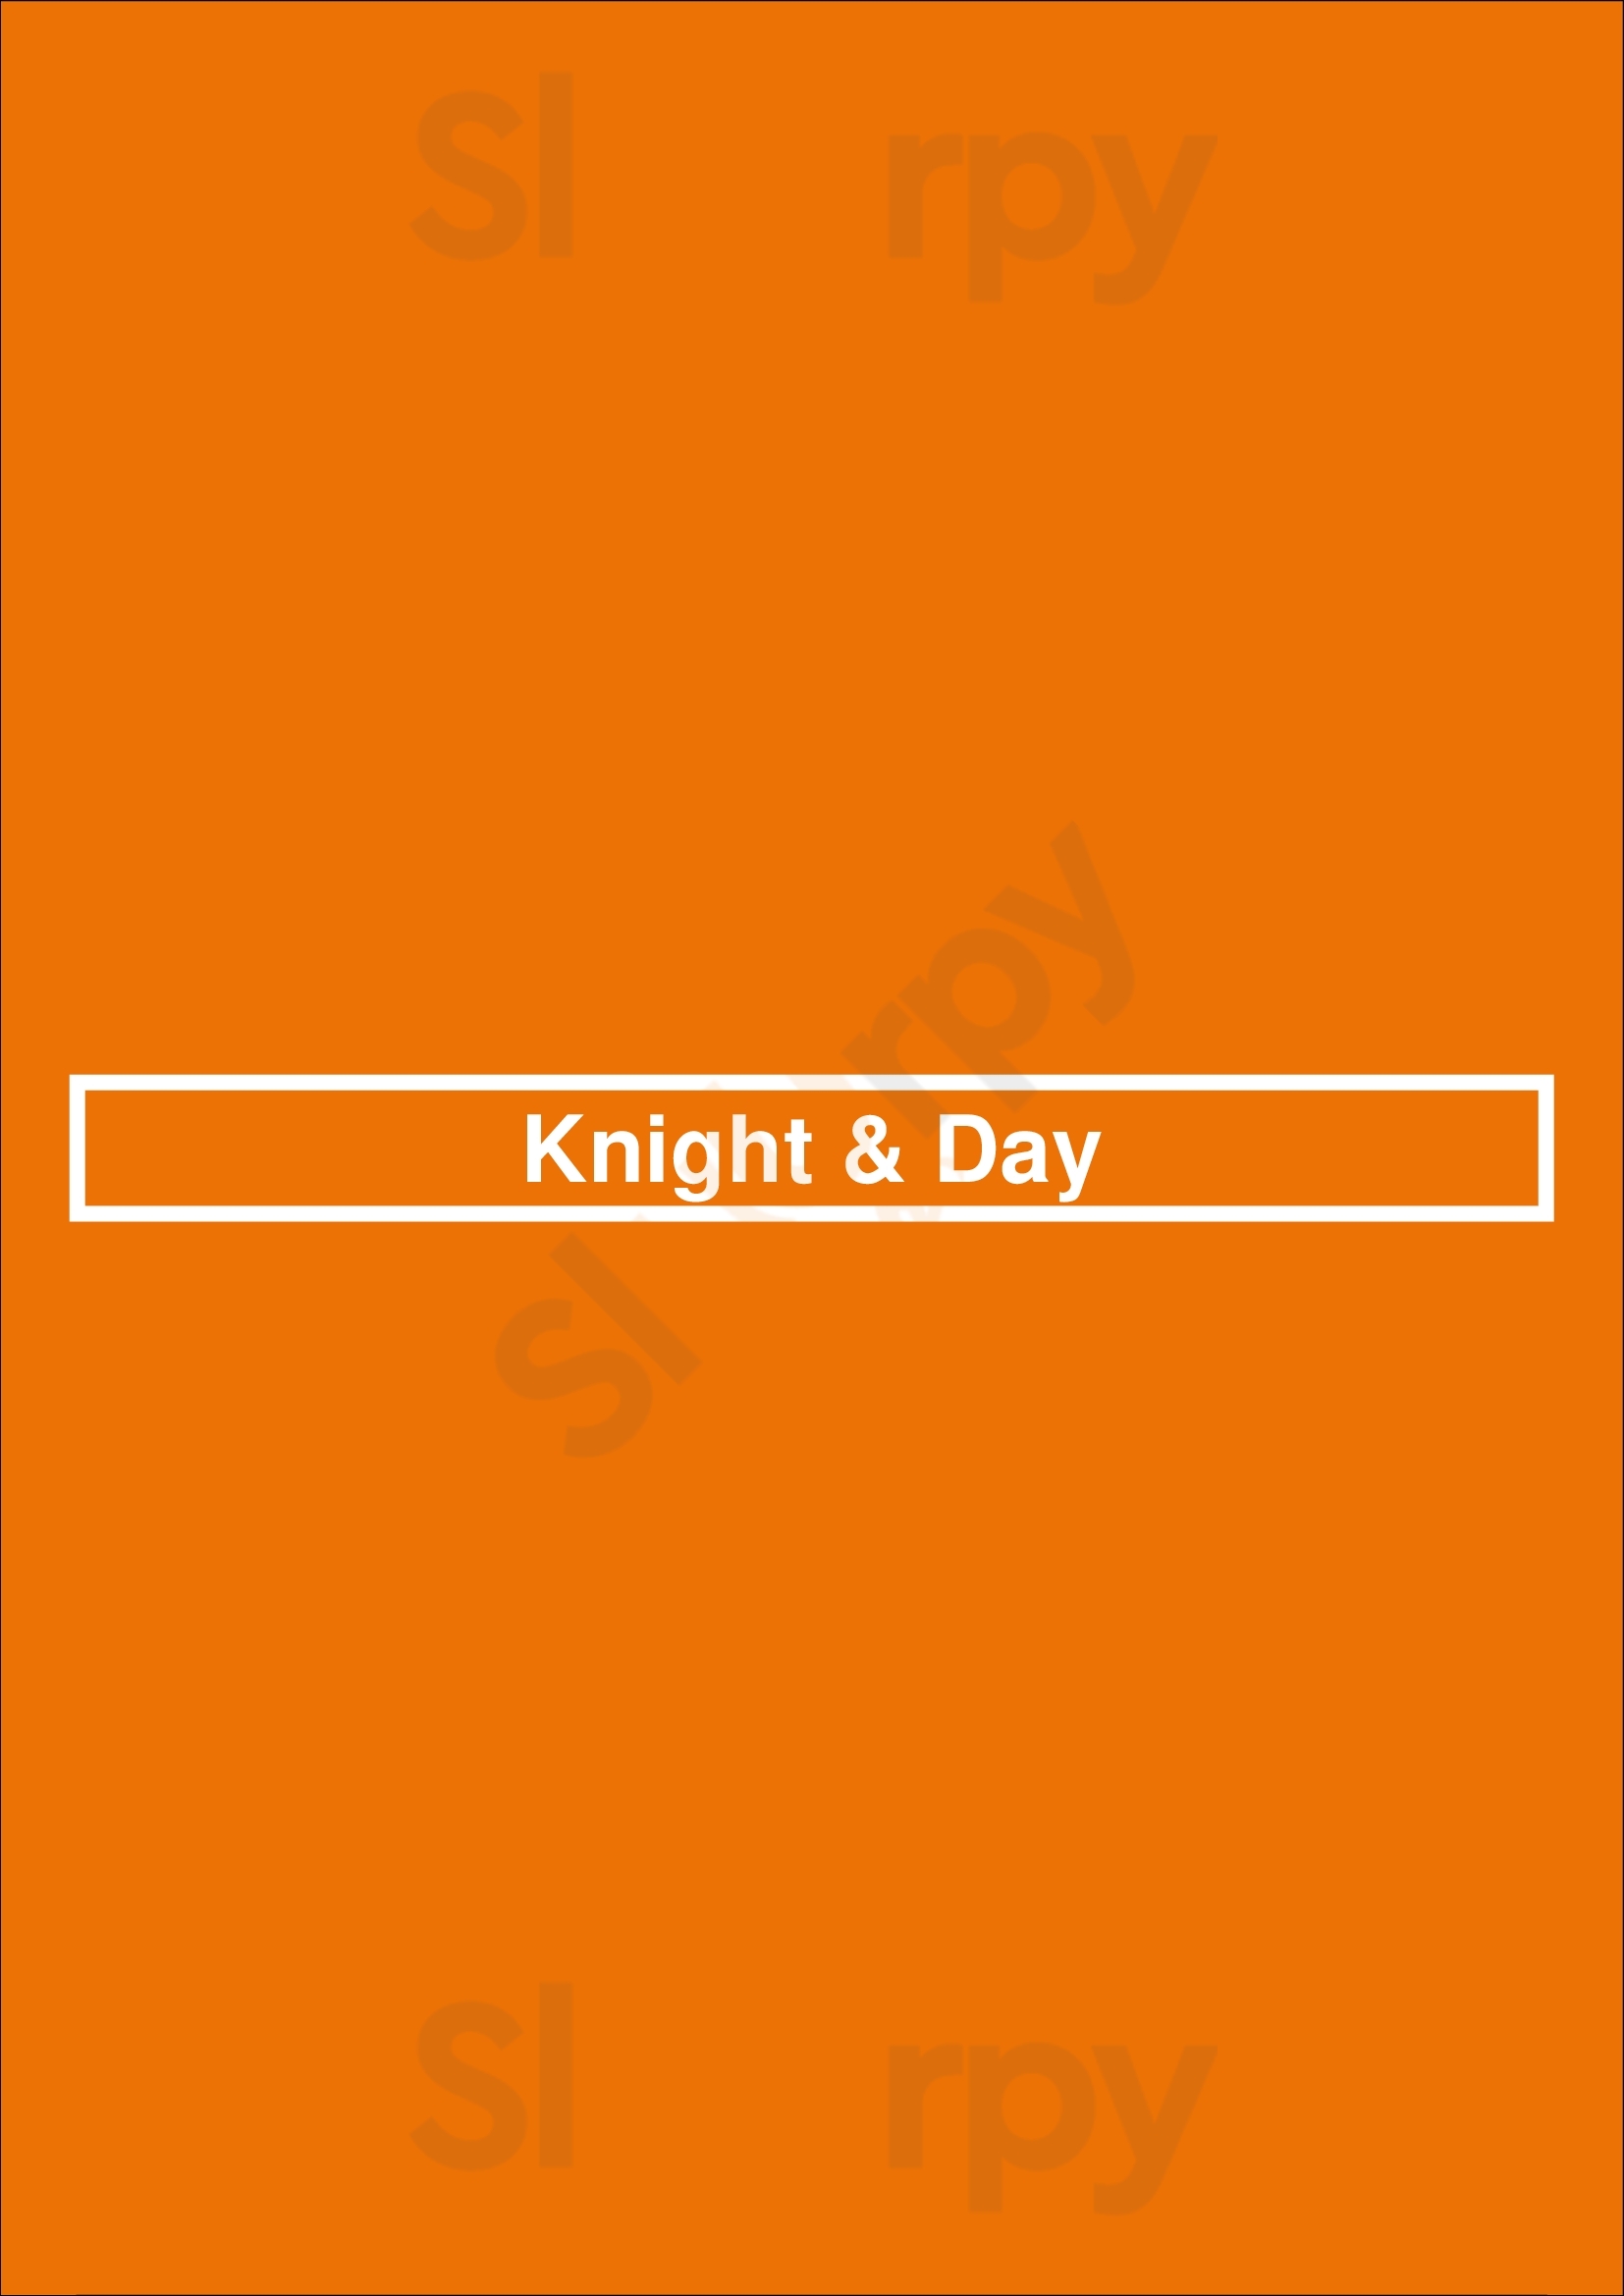 Knight & Day Vancouver Menu - 1